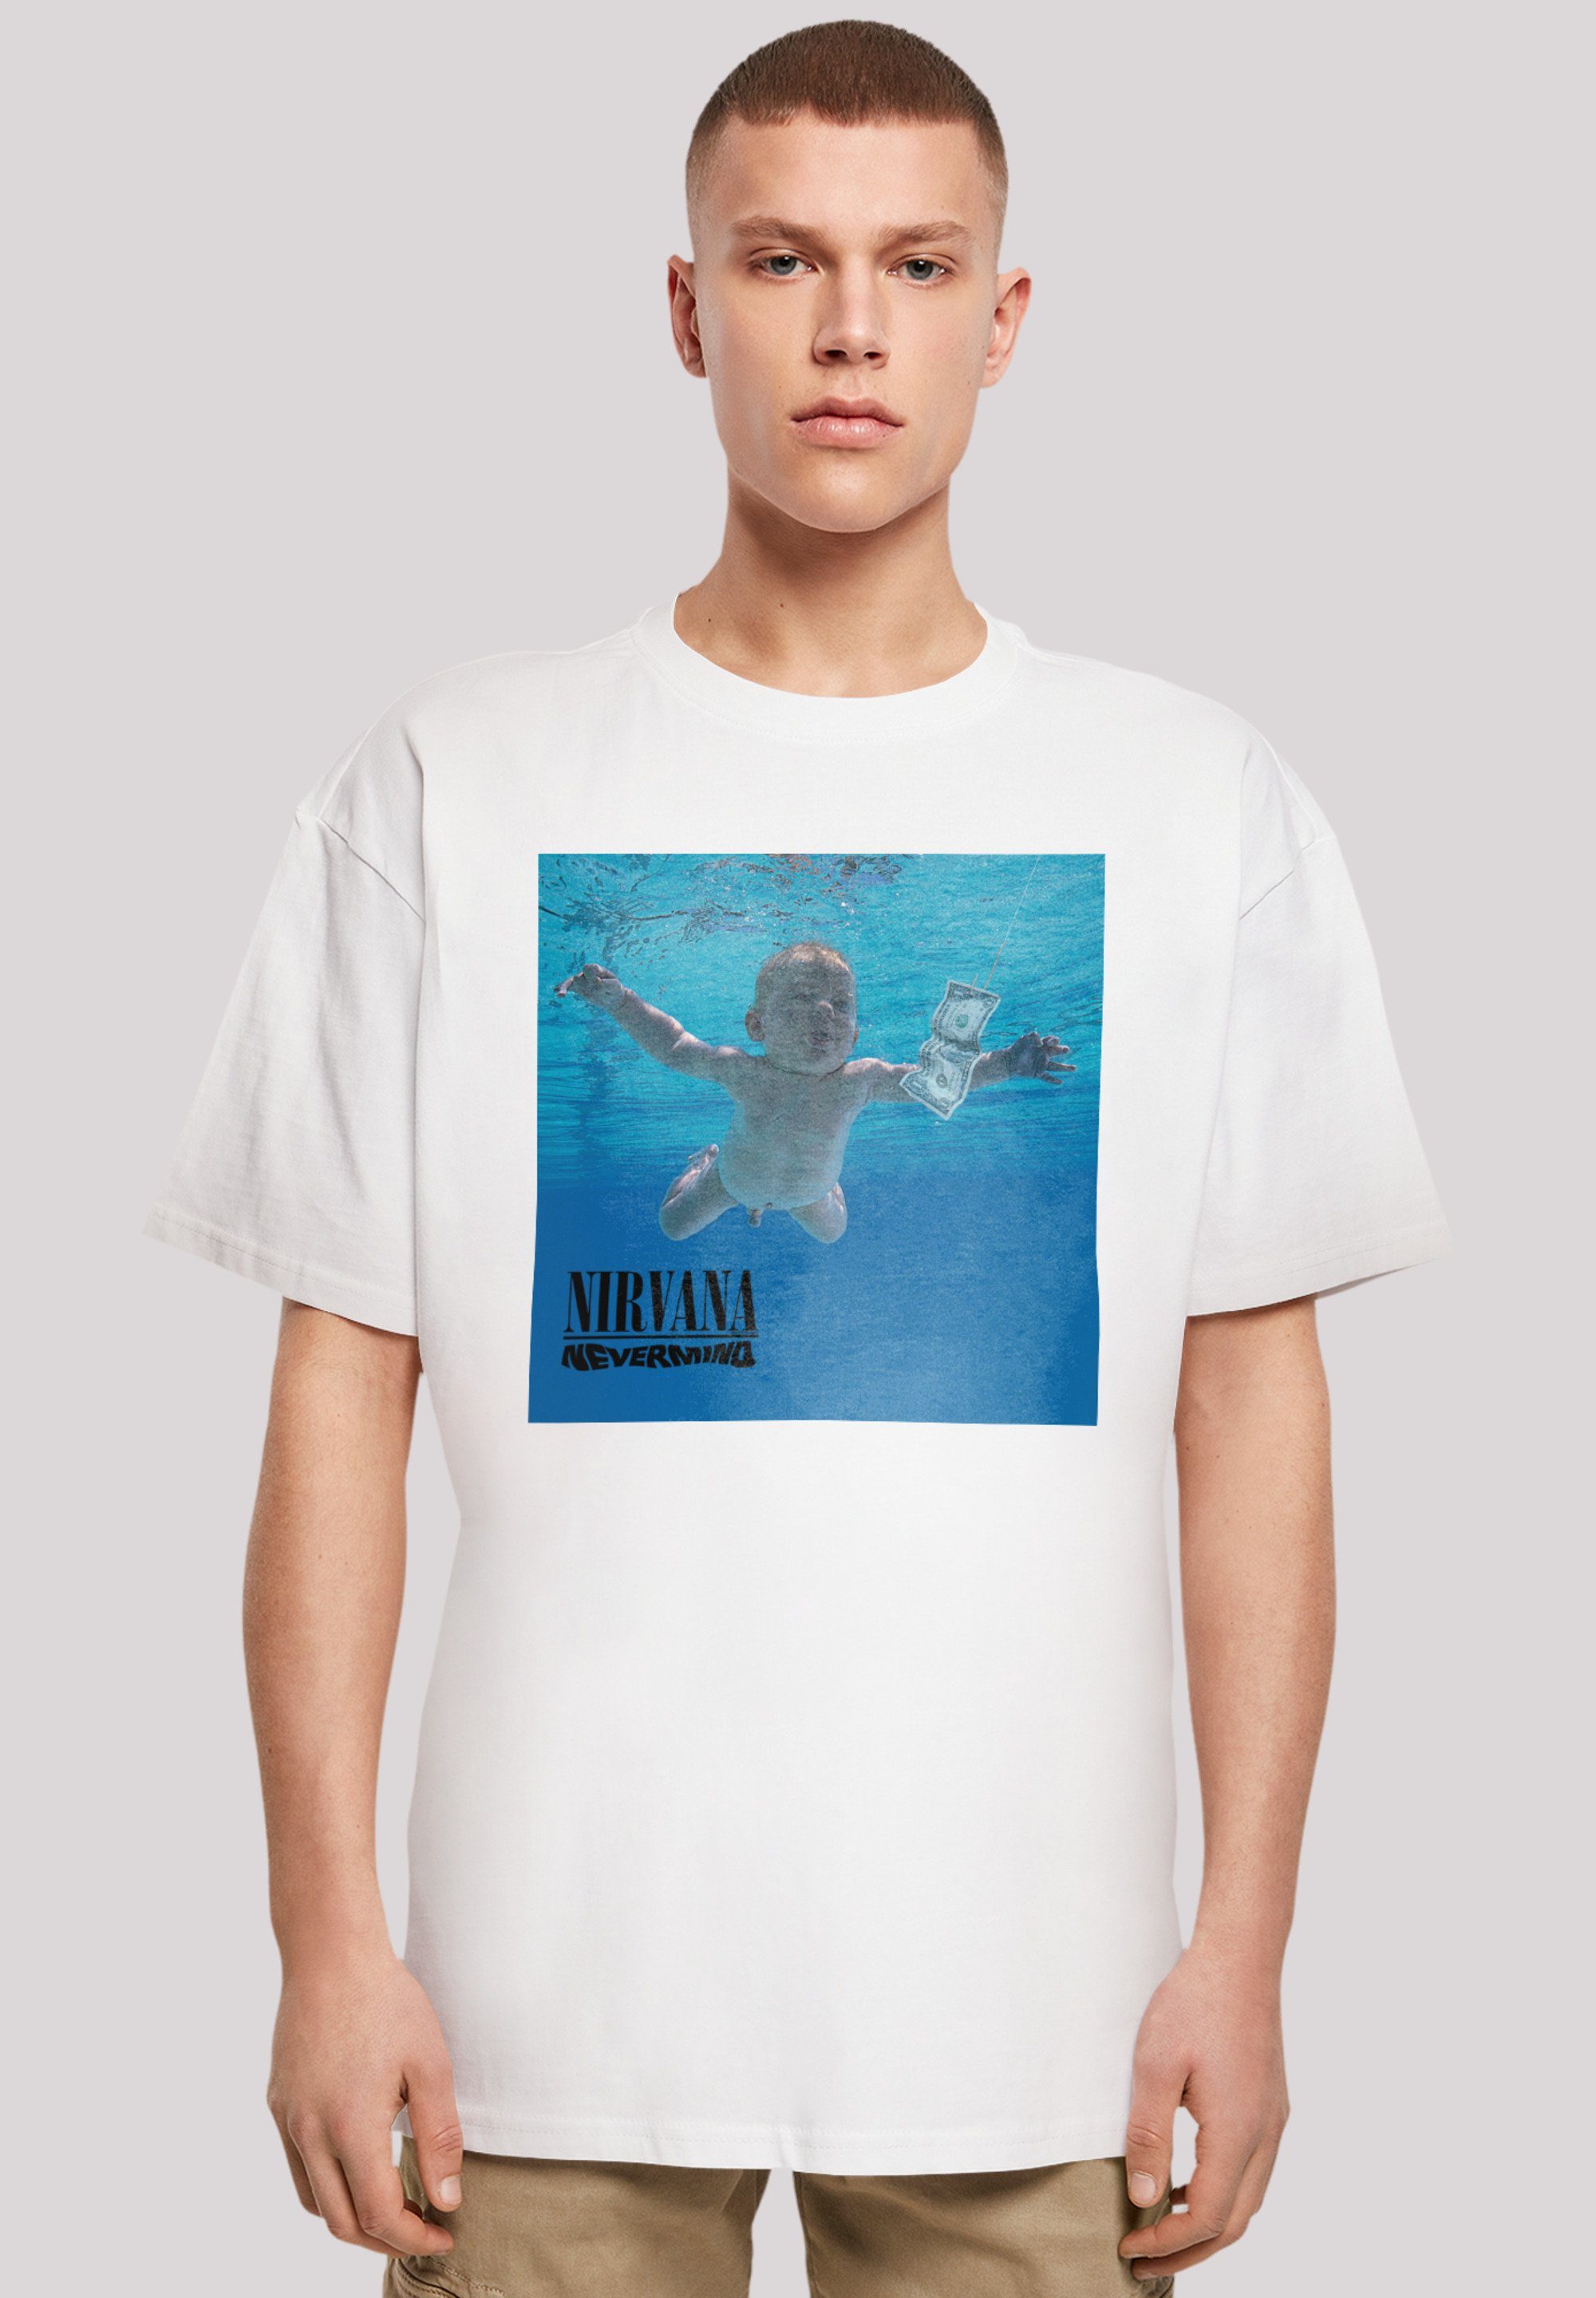 F4NT4STIC T-Shirt Nirvana Rock Band Nevermind Album Premium Qualität weiß | T-Shirts